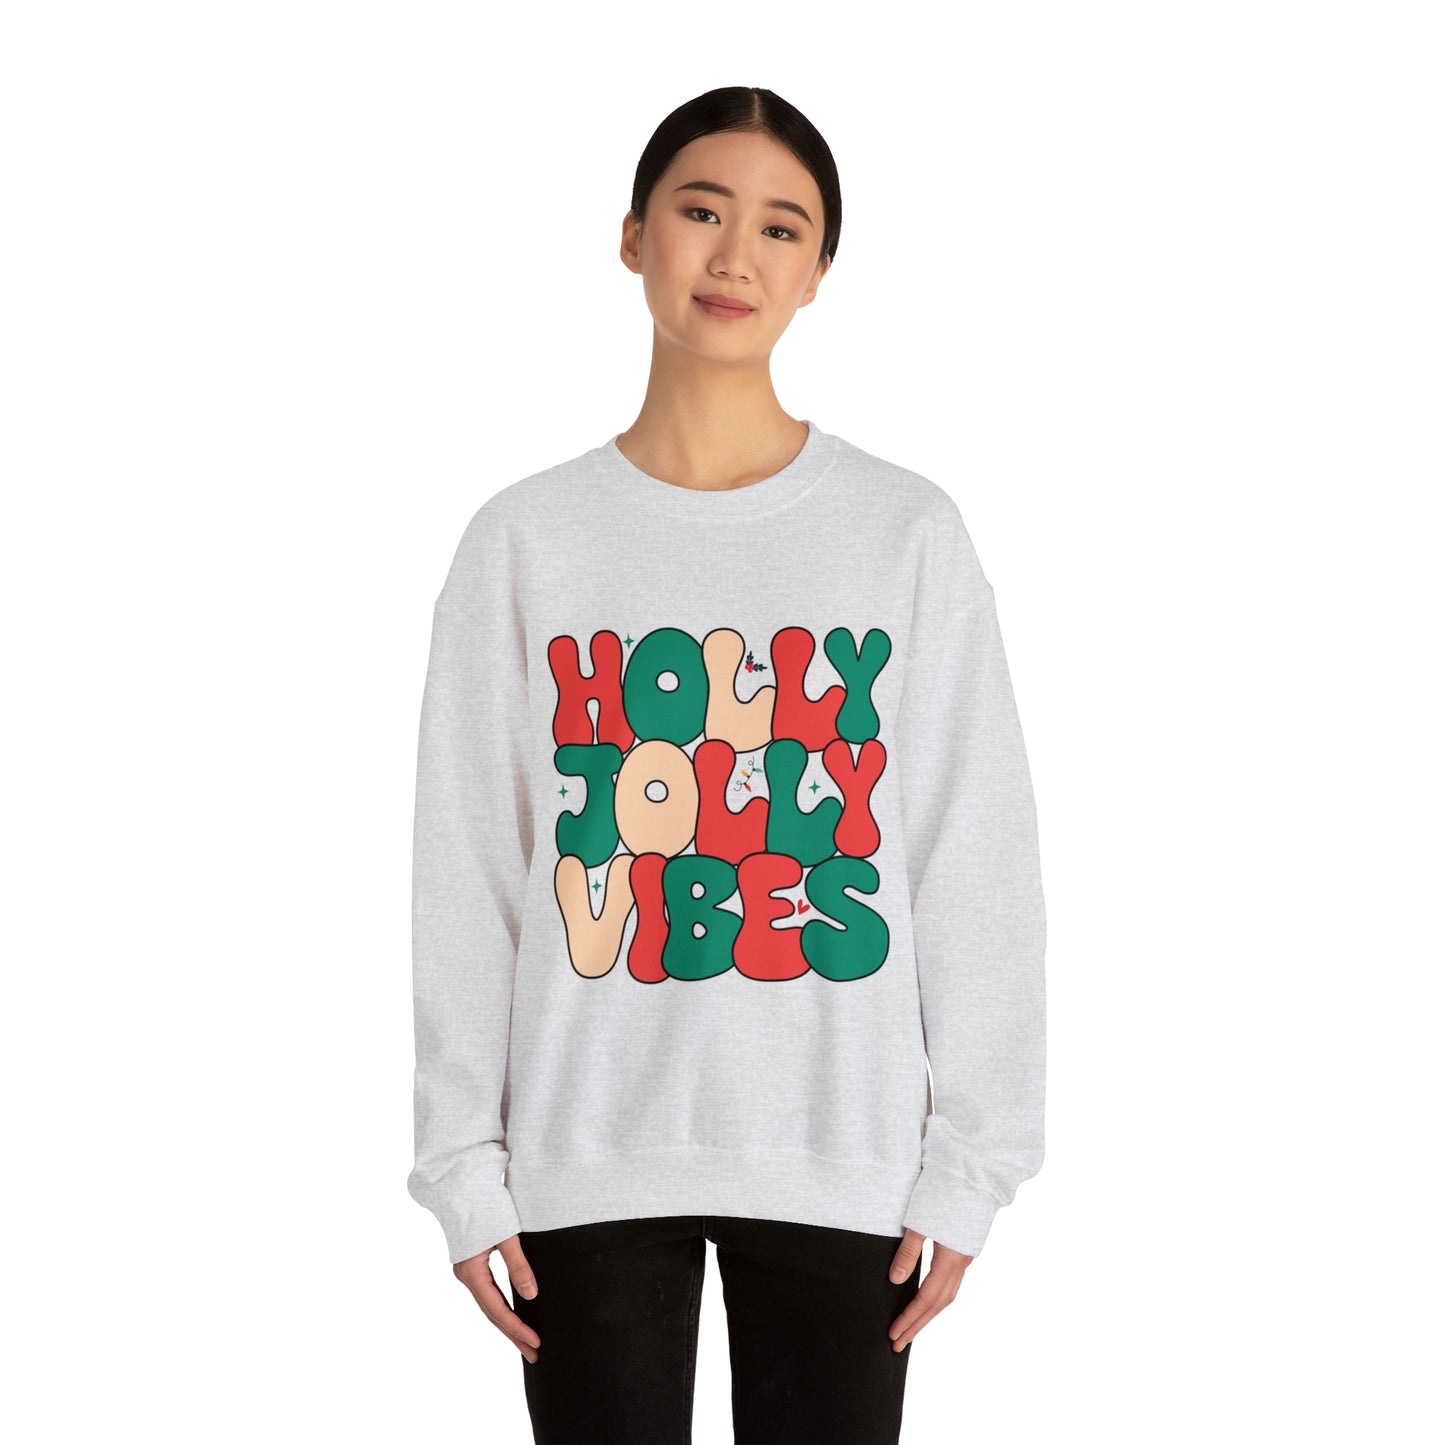 Holly Jolly Vibes Women's Christmas Winter Crewneck Sweatshirt